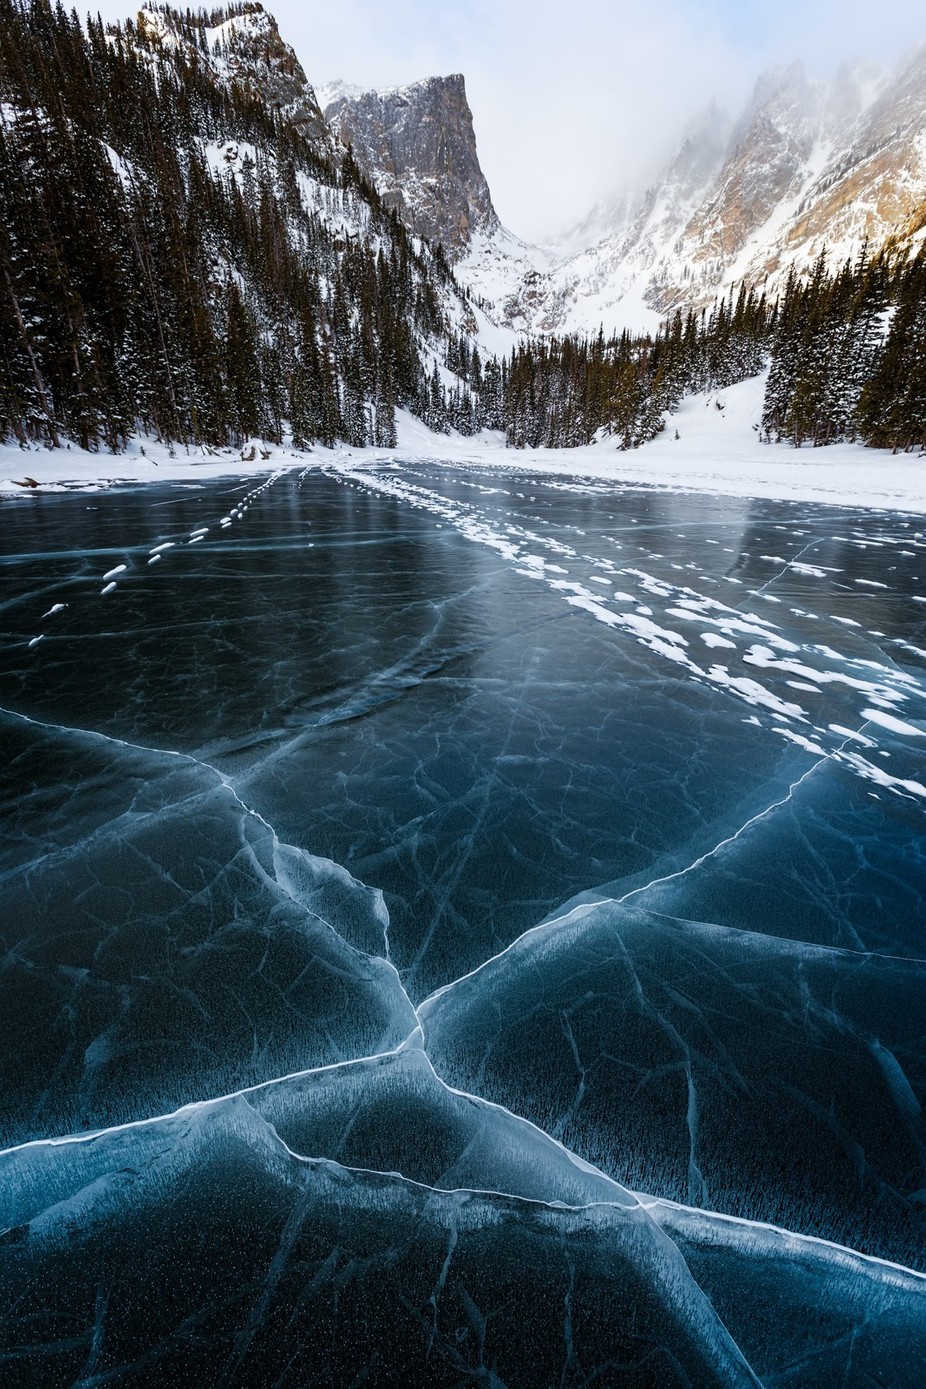 Cracks In The Ice by carlfino - Winter Wonderland Photo Contest